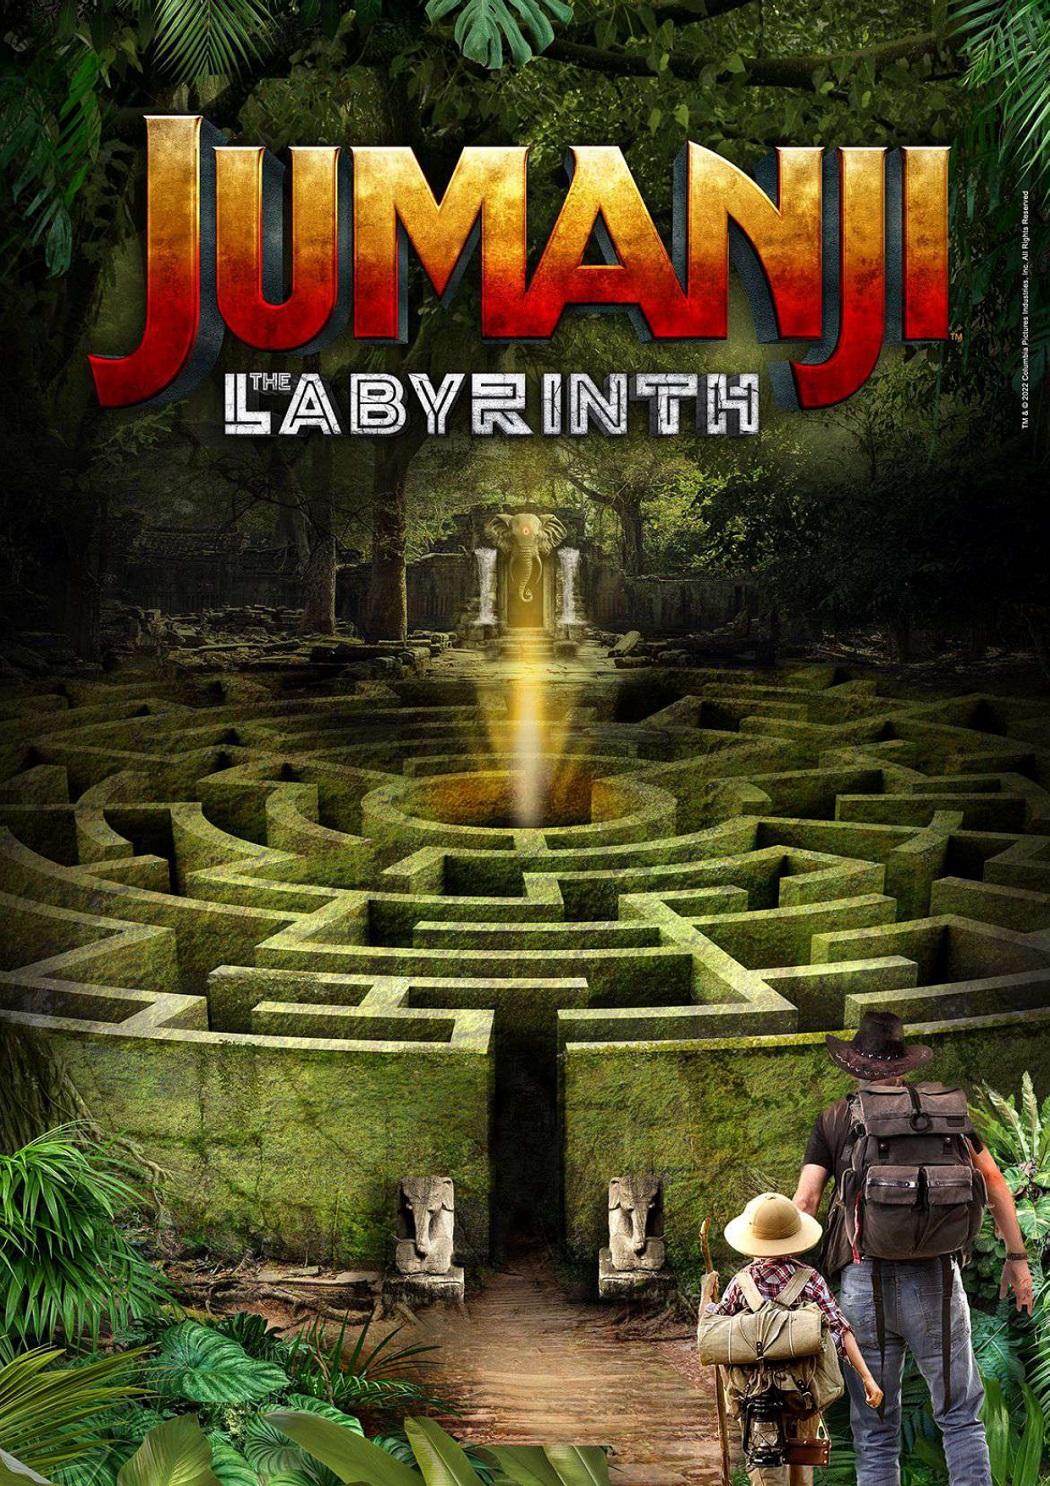 New For 2023 Jumanji The Labyrinth at Gardaland